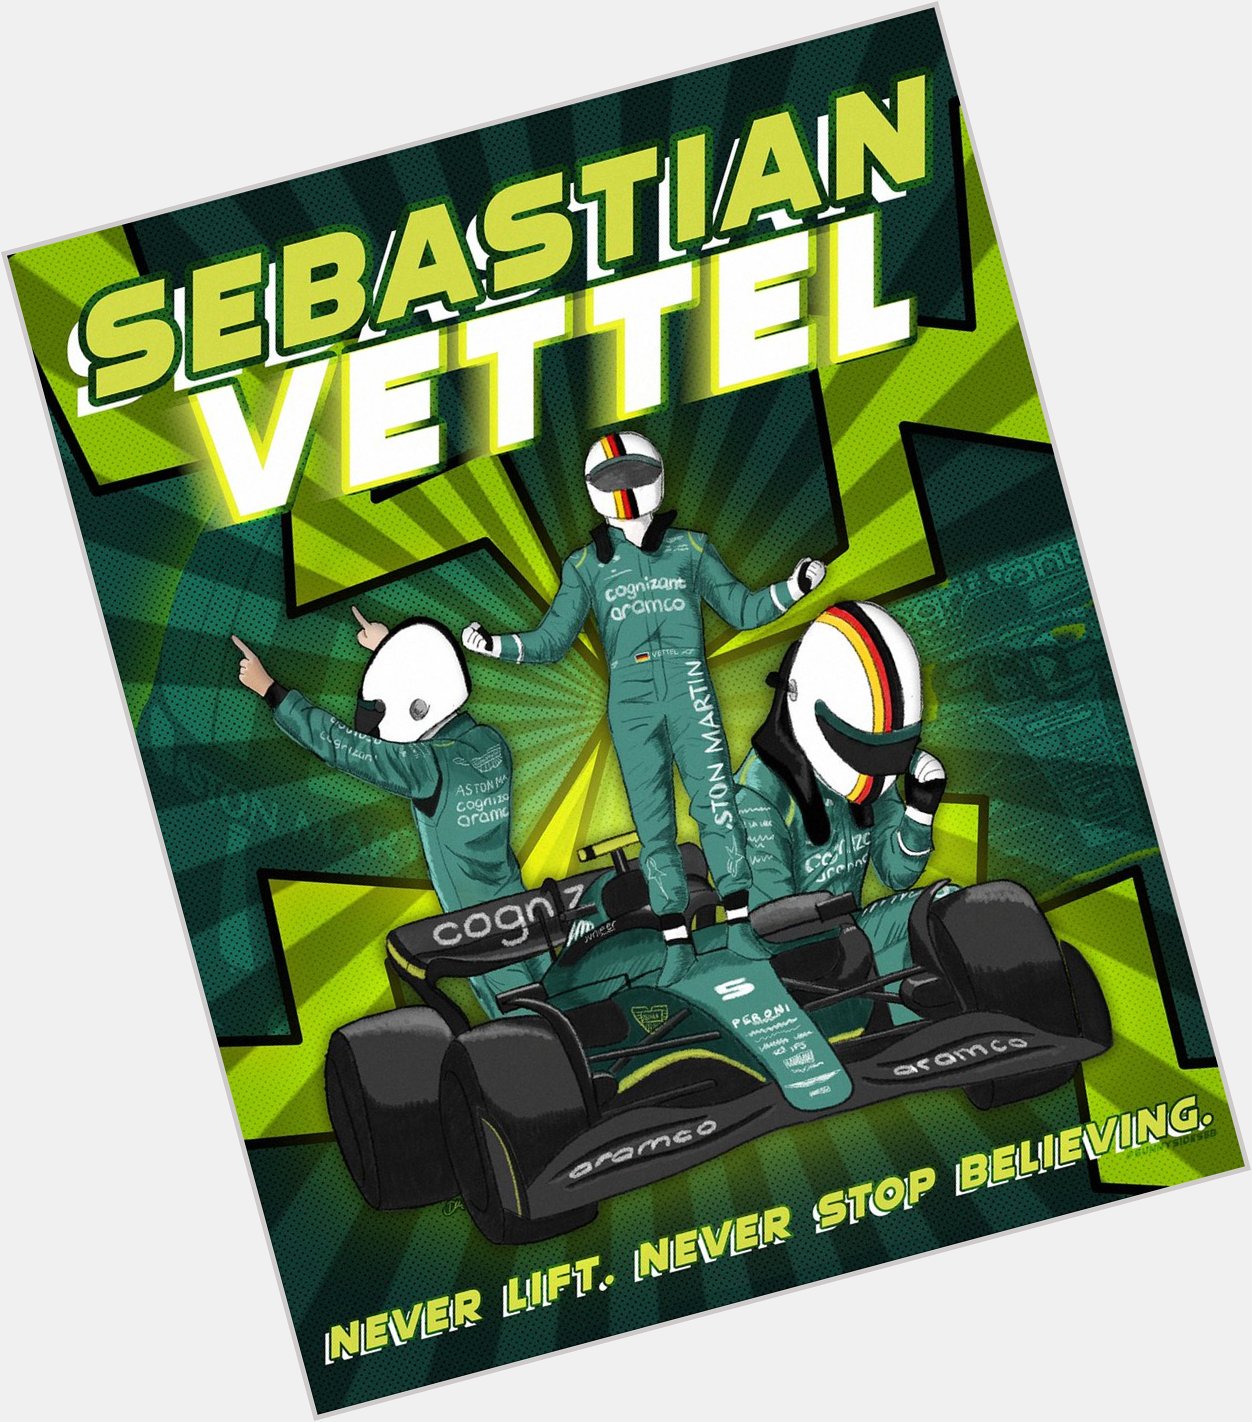 Happy sebastian vettel bday weekend! ______________ |  